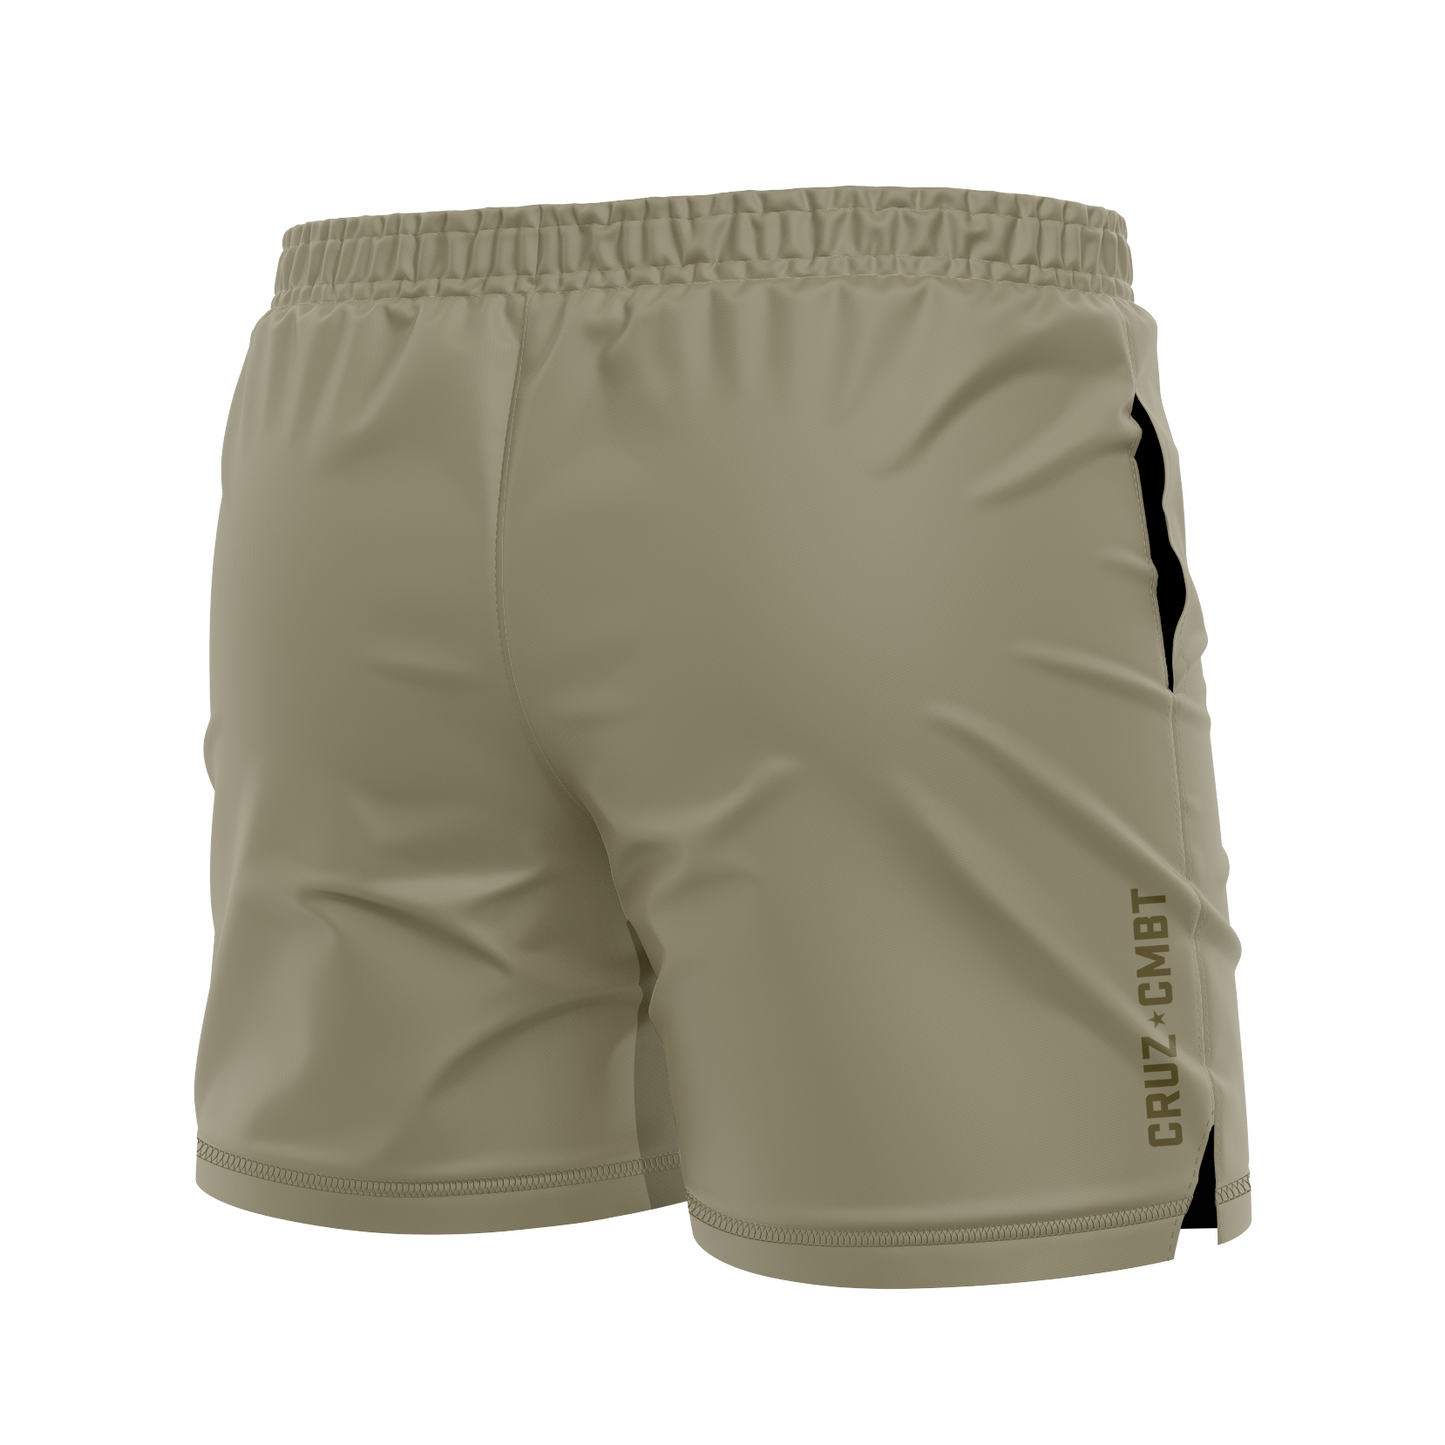 Base Collection men's FC shorts, gold